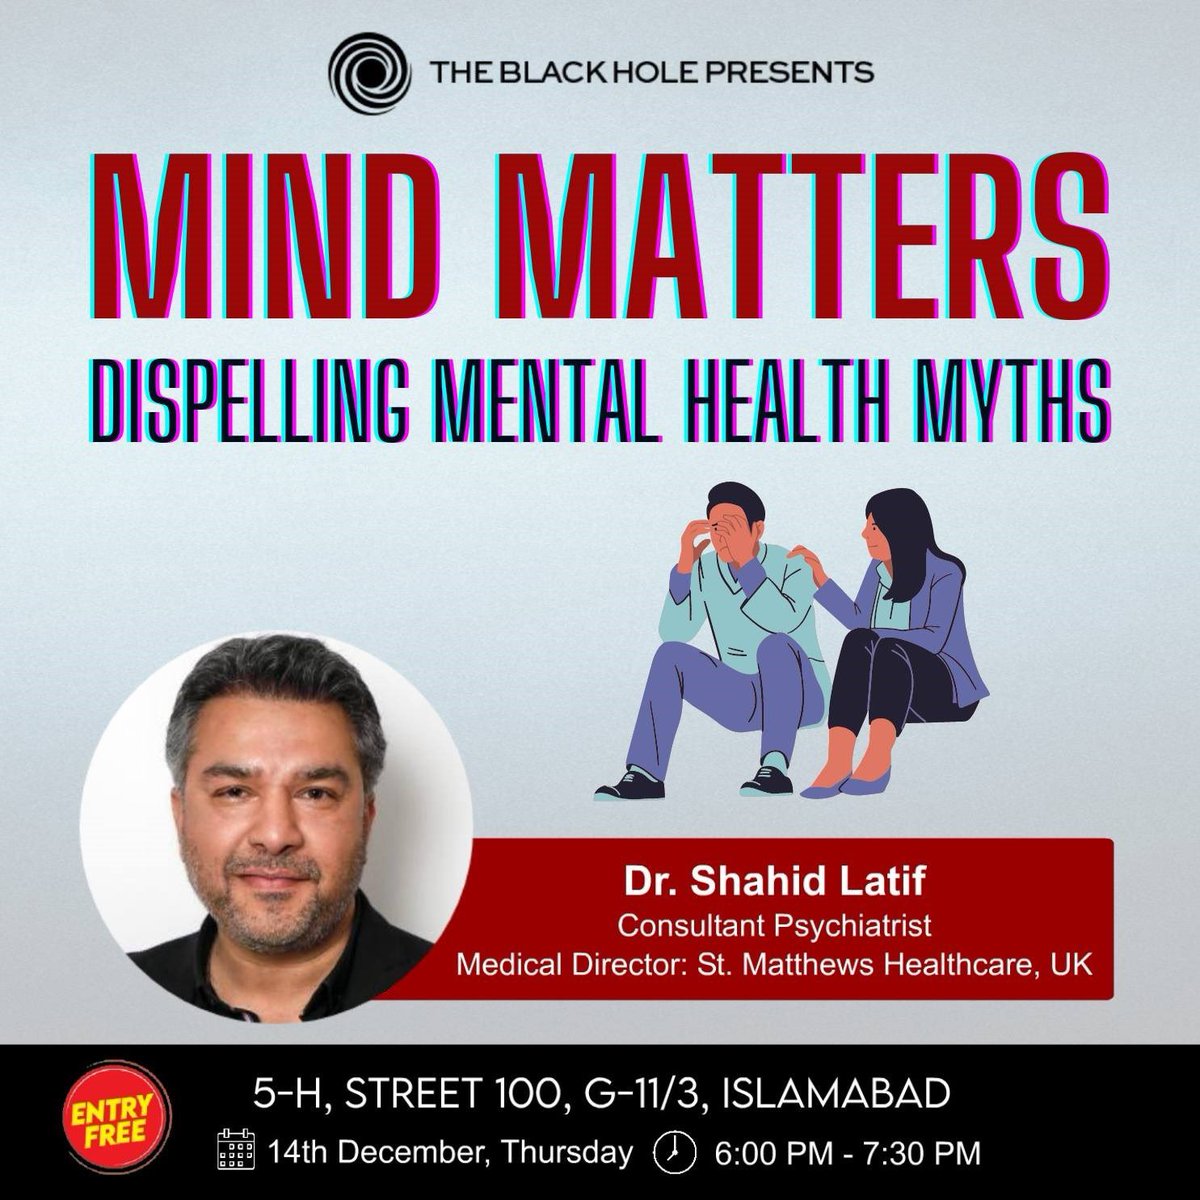 Mind Matters: Dispelling Mental Health Myths 14th Dec (Thursday), 6:00 PM - 7:30 PM Venue: The Black Hole 5H, Street 100, G-11/3, Islamabad. goo.gl/maps/jGvnEhQdV… For live-streaming: facebook.com/theblackholeis…